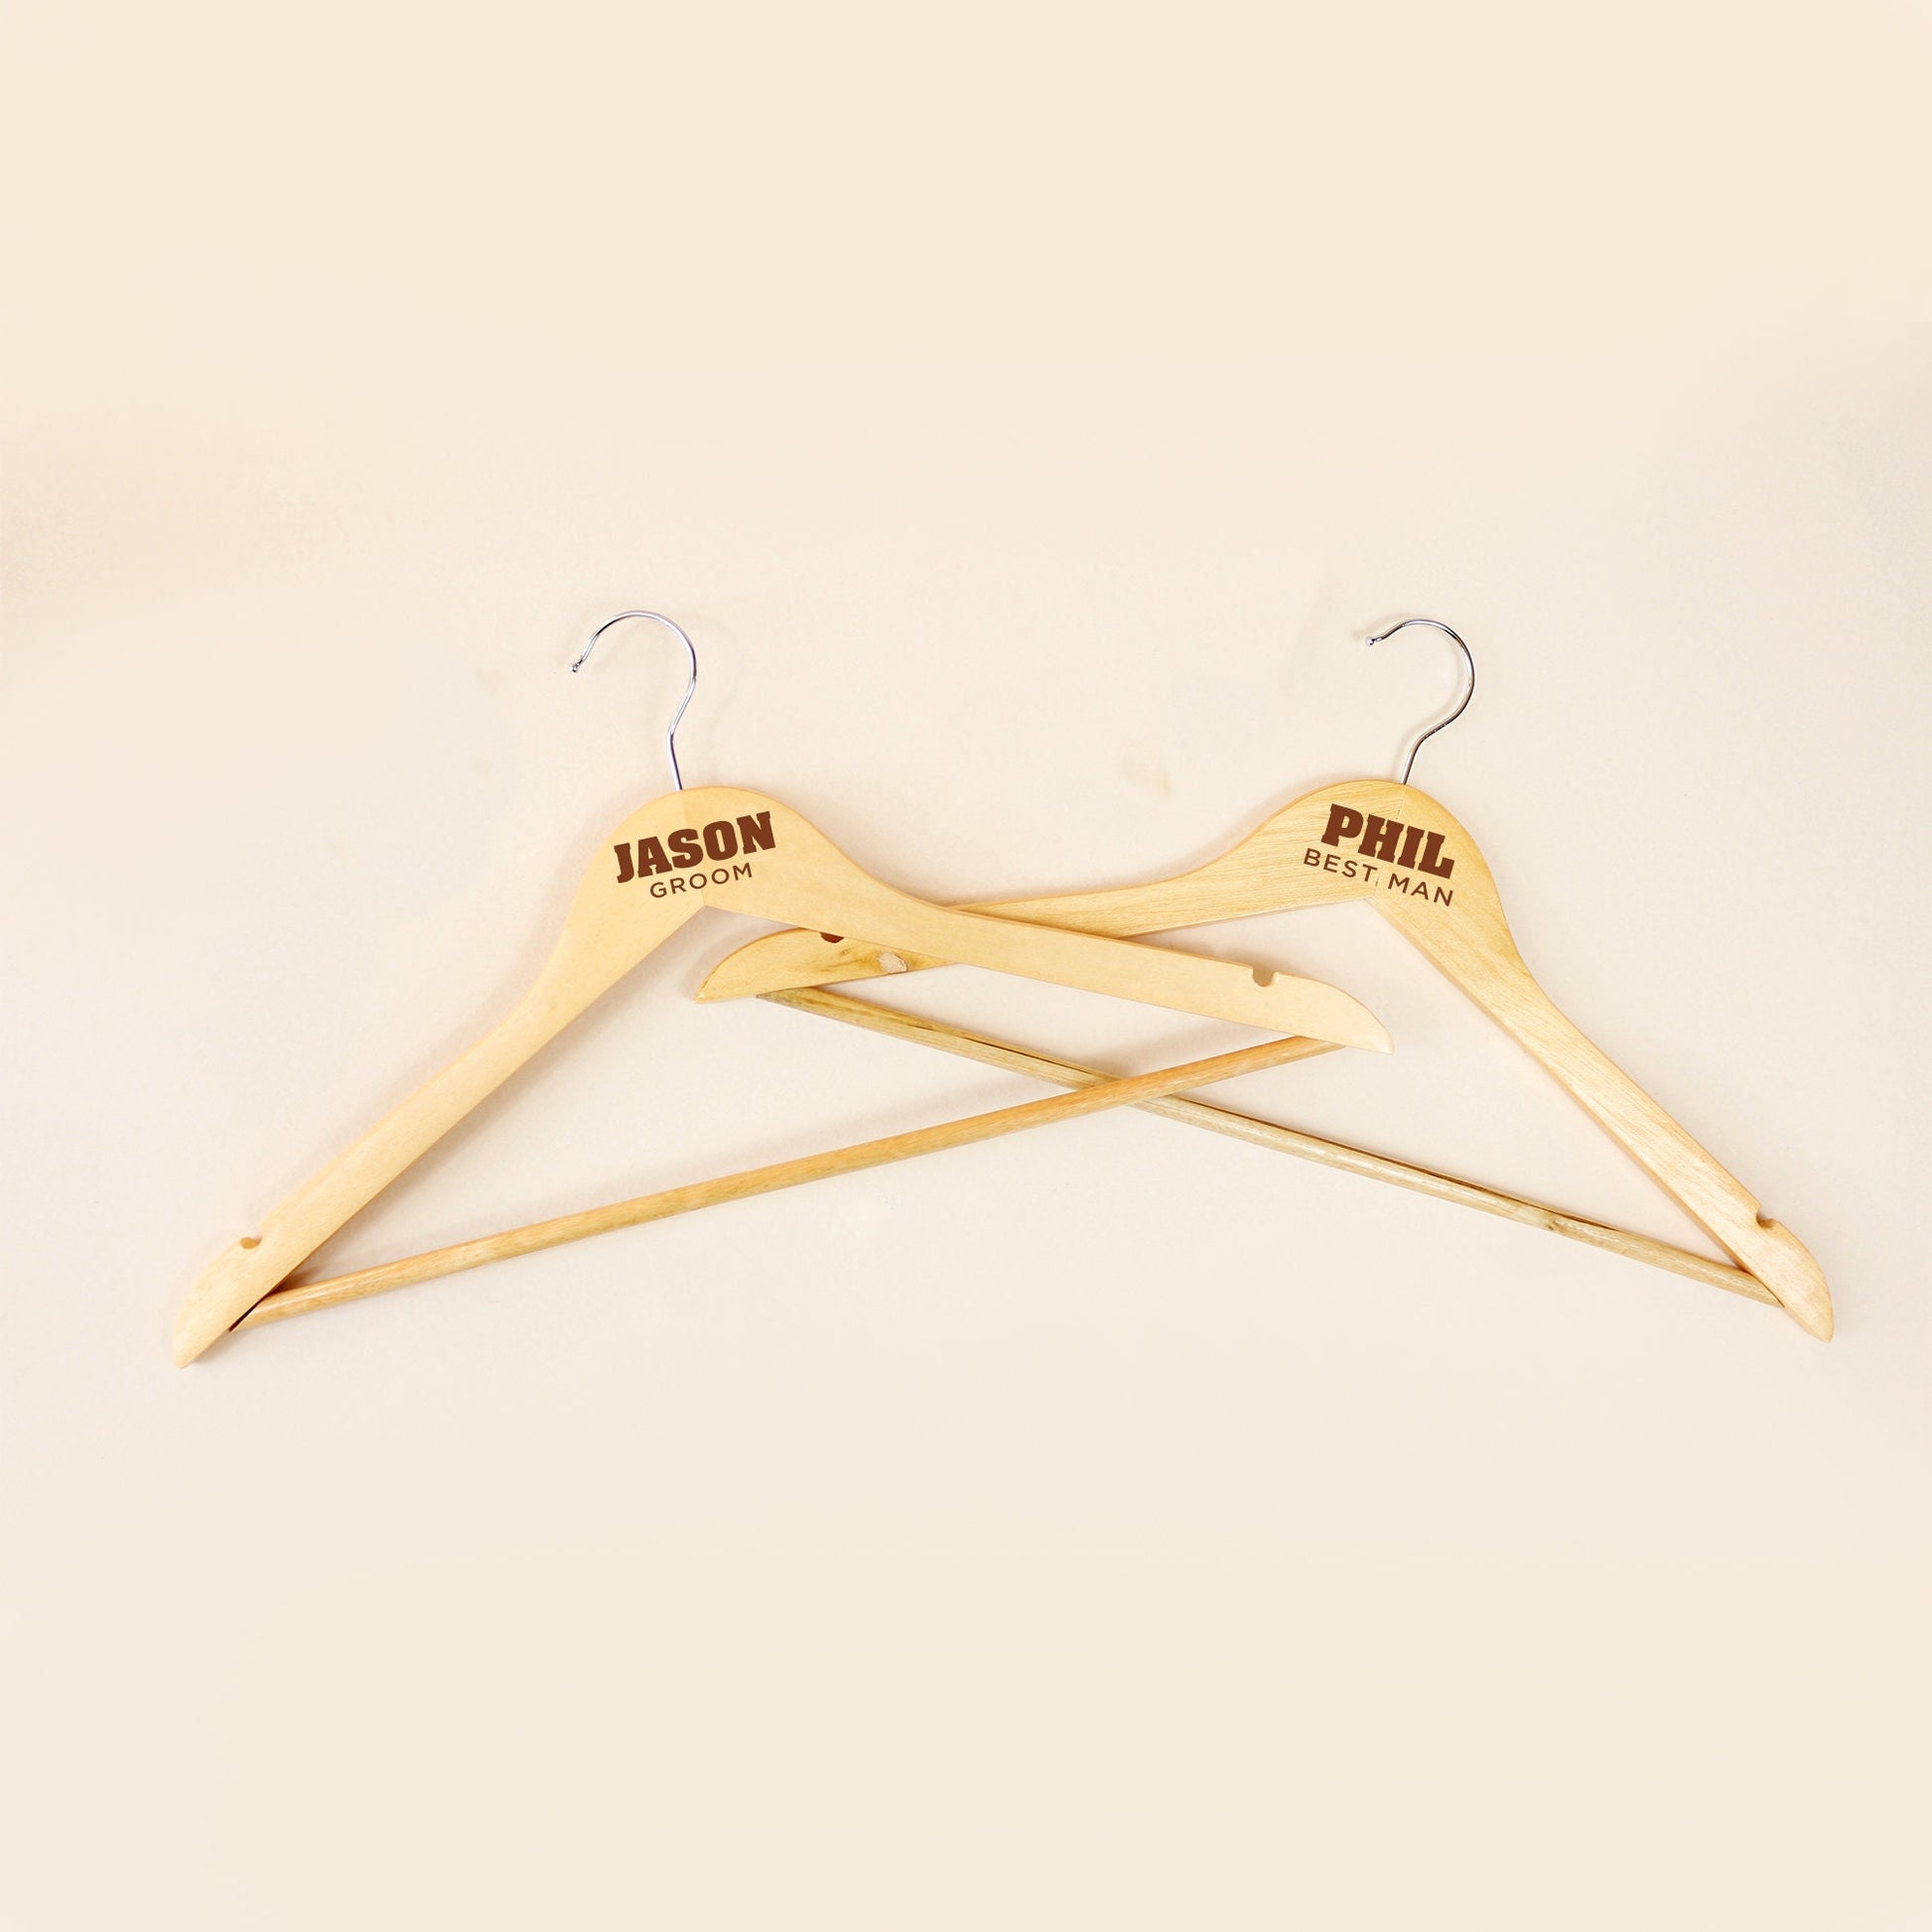 Personalized Bride Hangers - Custom Engraved Wedding Hangers - Wooden Engraved Hanger - Bridal Dress Hangers